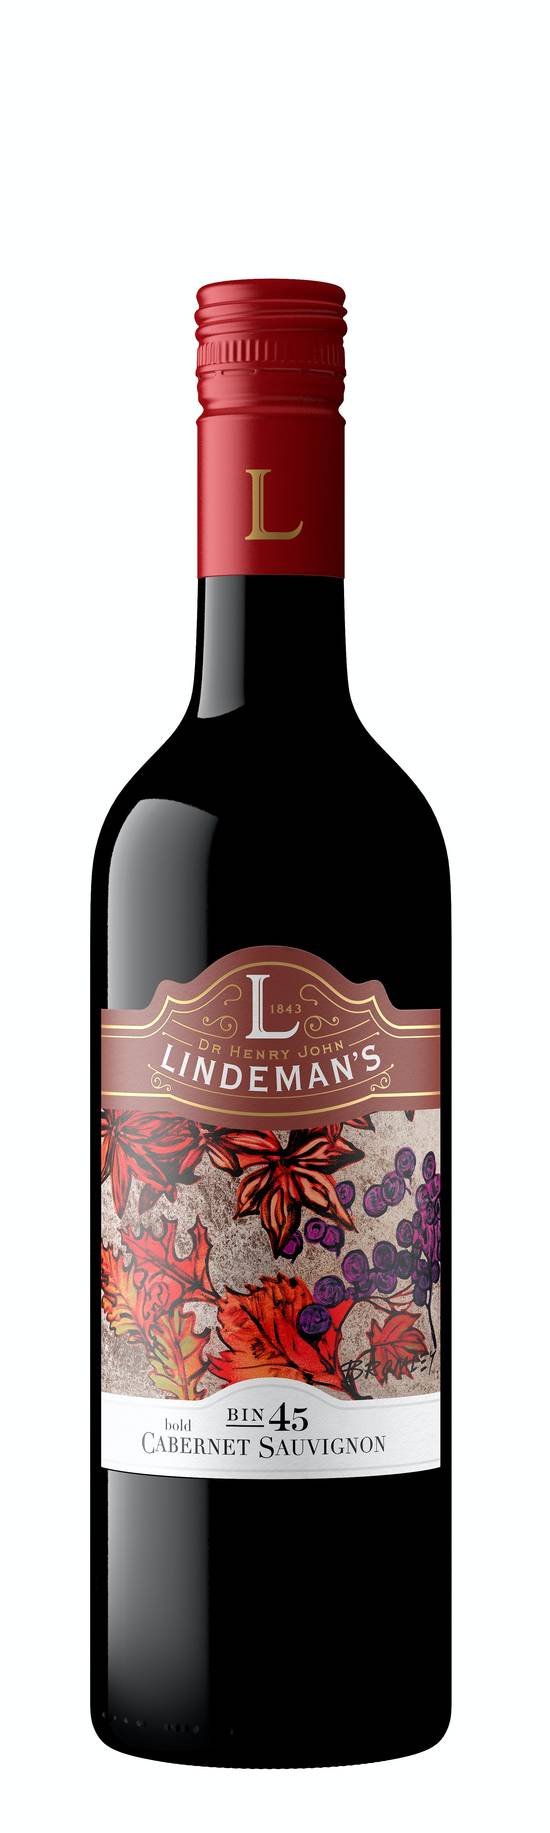 Lindeman's Cabernet Sauvignon Red Wine 2016 (750 ml)